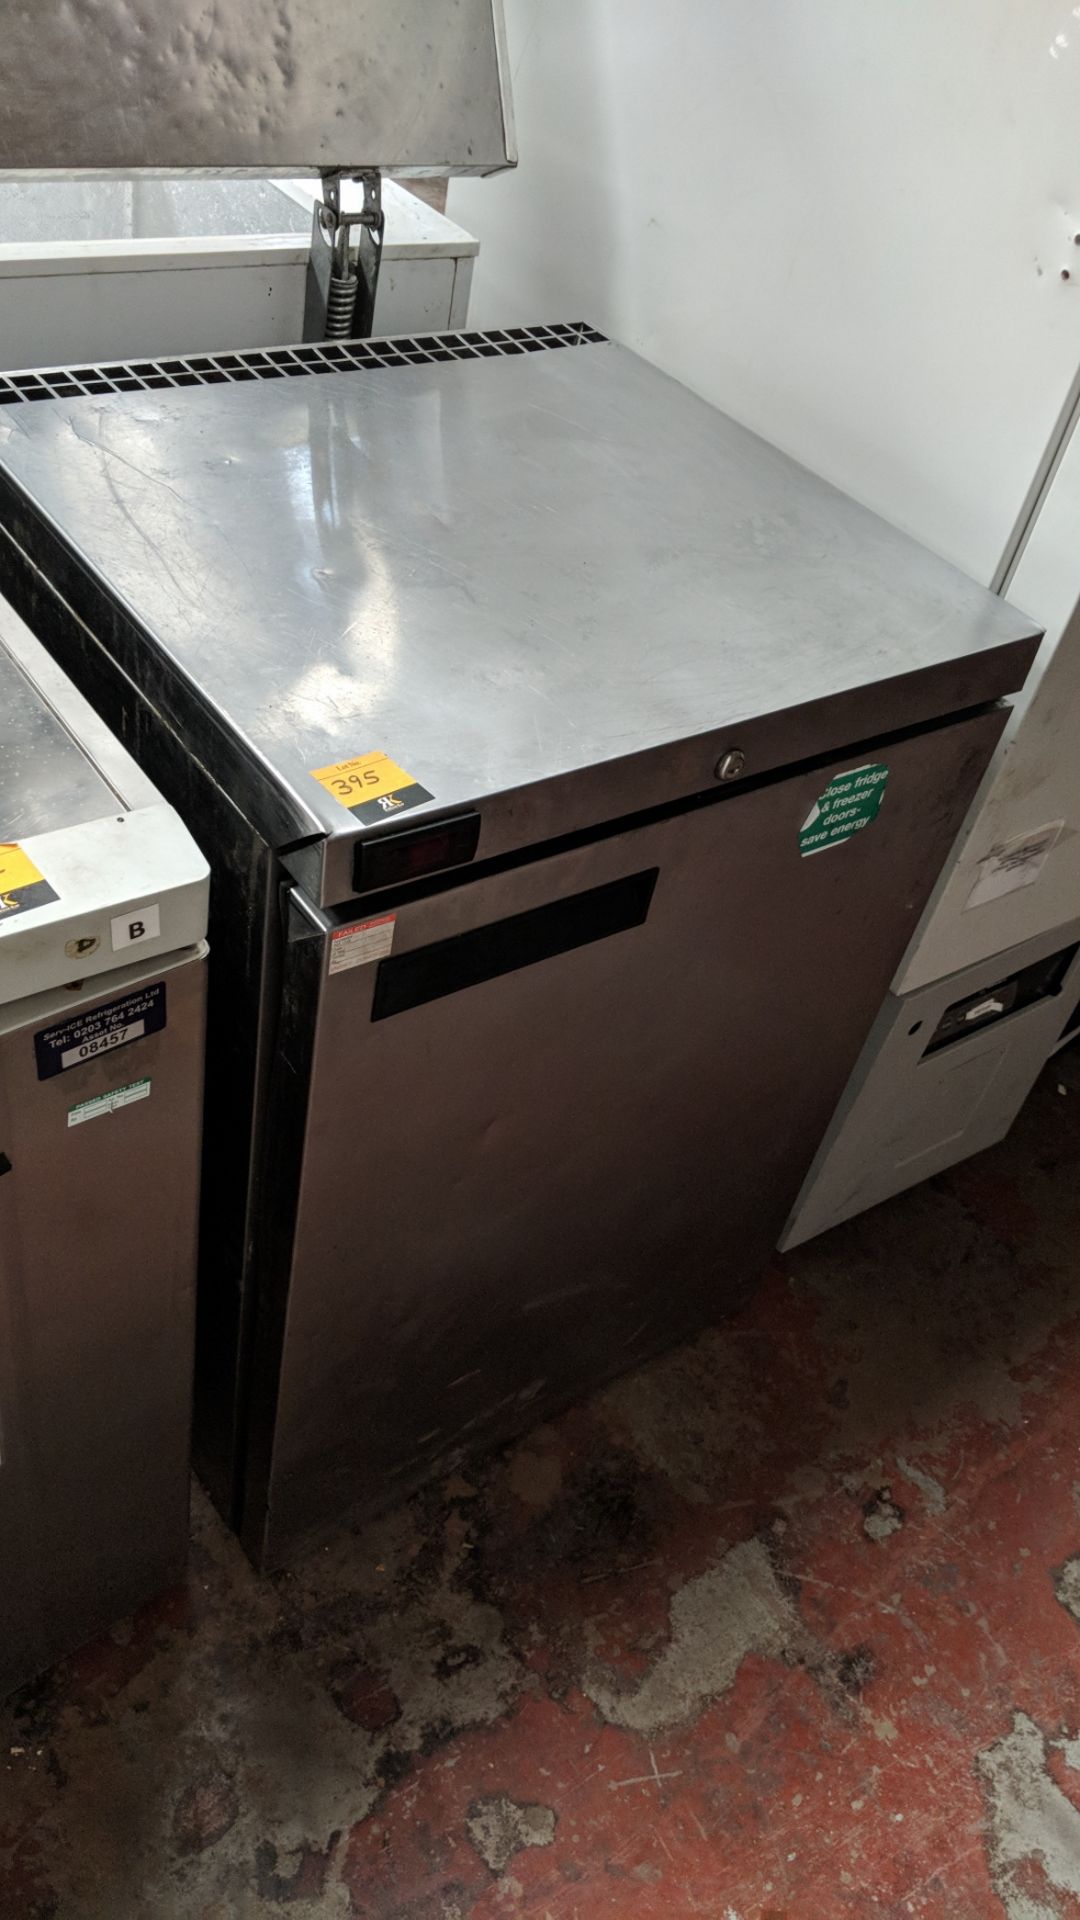 Williams stainless steel under counter fridge, model HP5SC IMPORTANT: Please remember goods